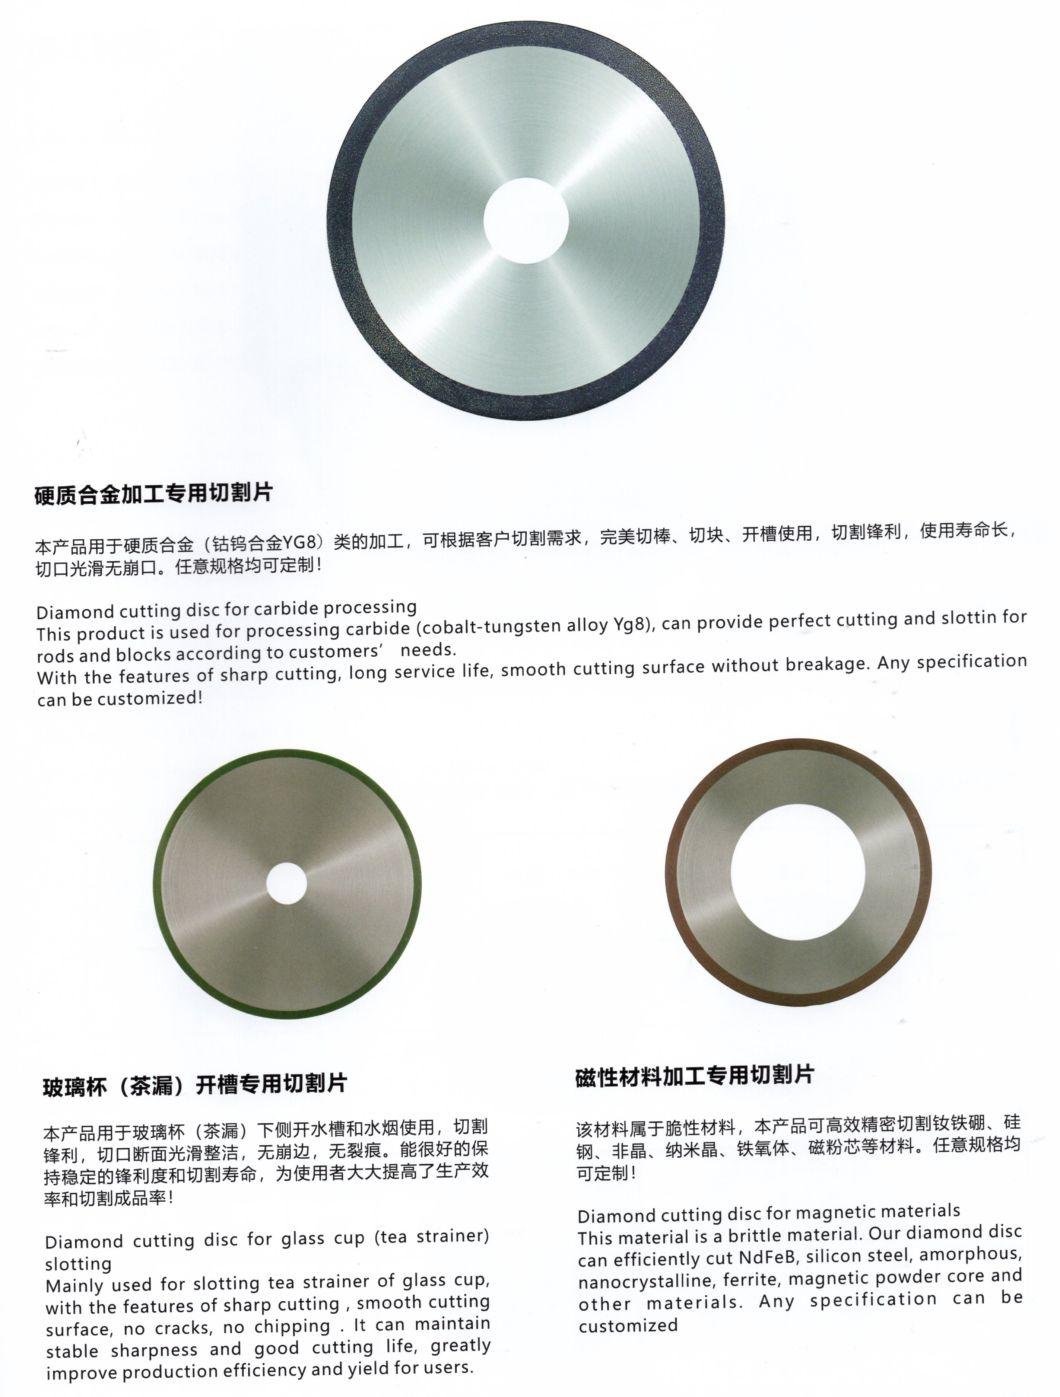 Metal Bonded Ultrathin Diamond Cutting Disc for Optical Glass